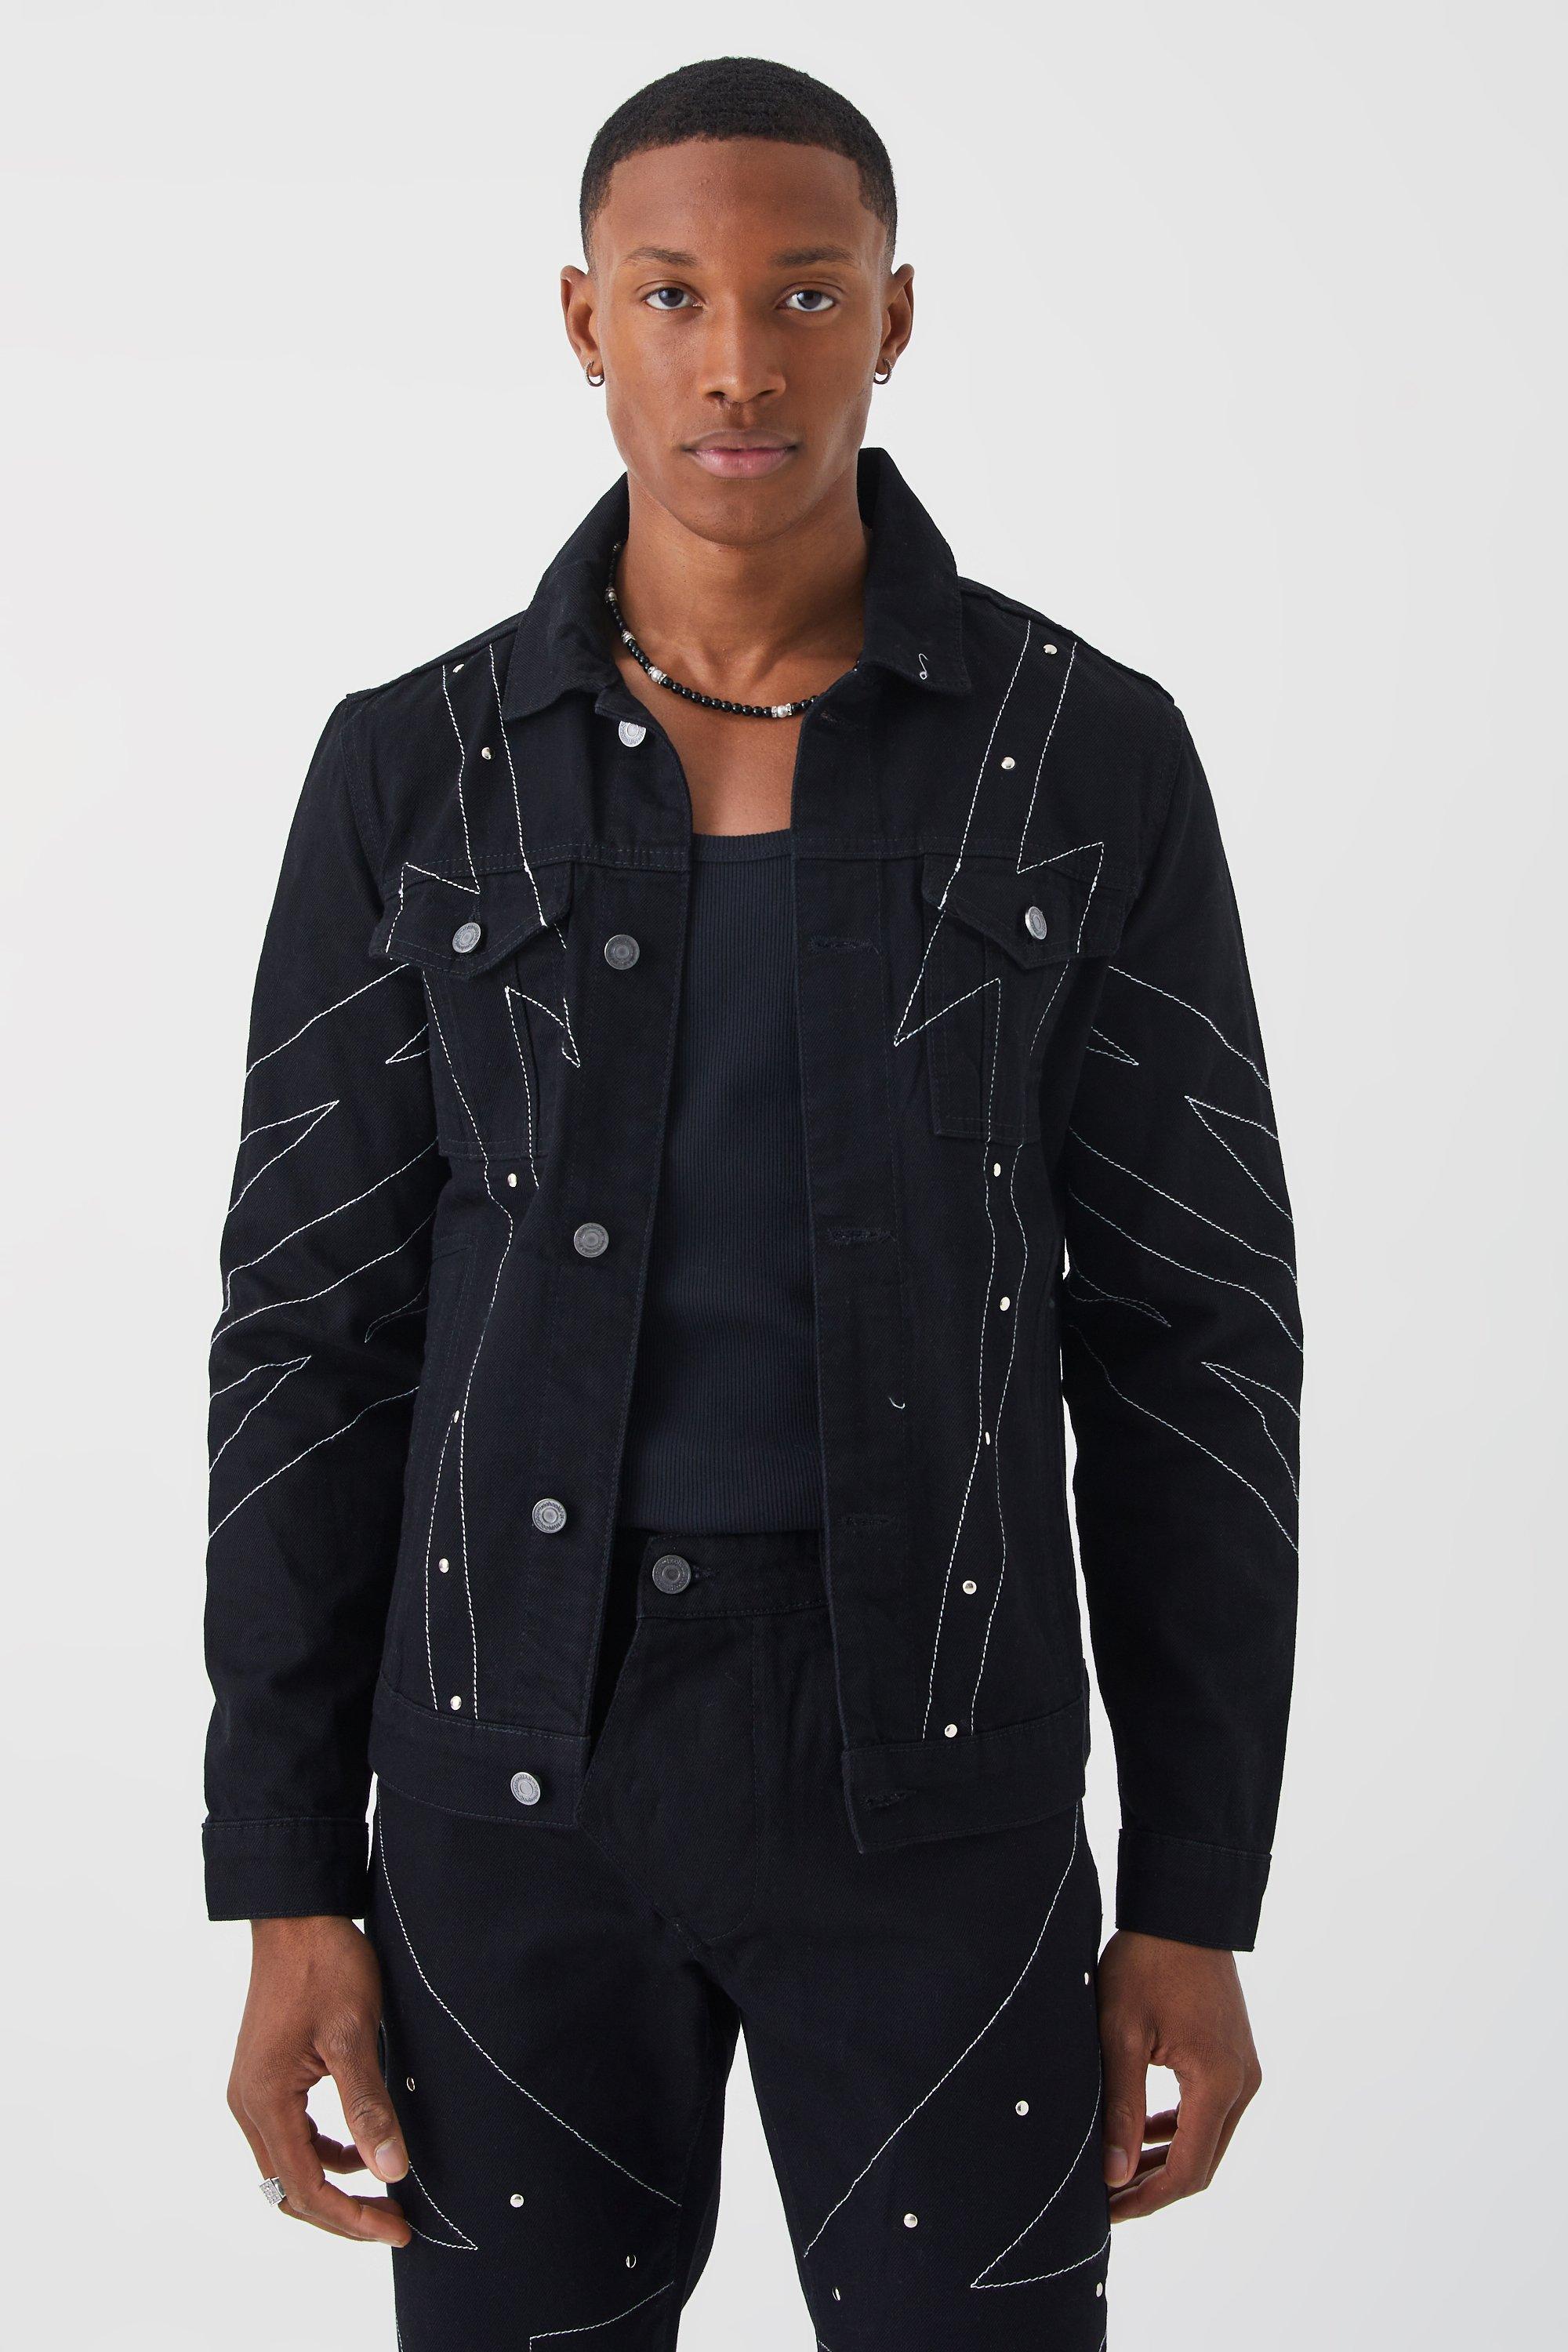 True black Studded Jean Jackets With Contrast Stitch